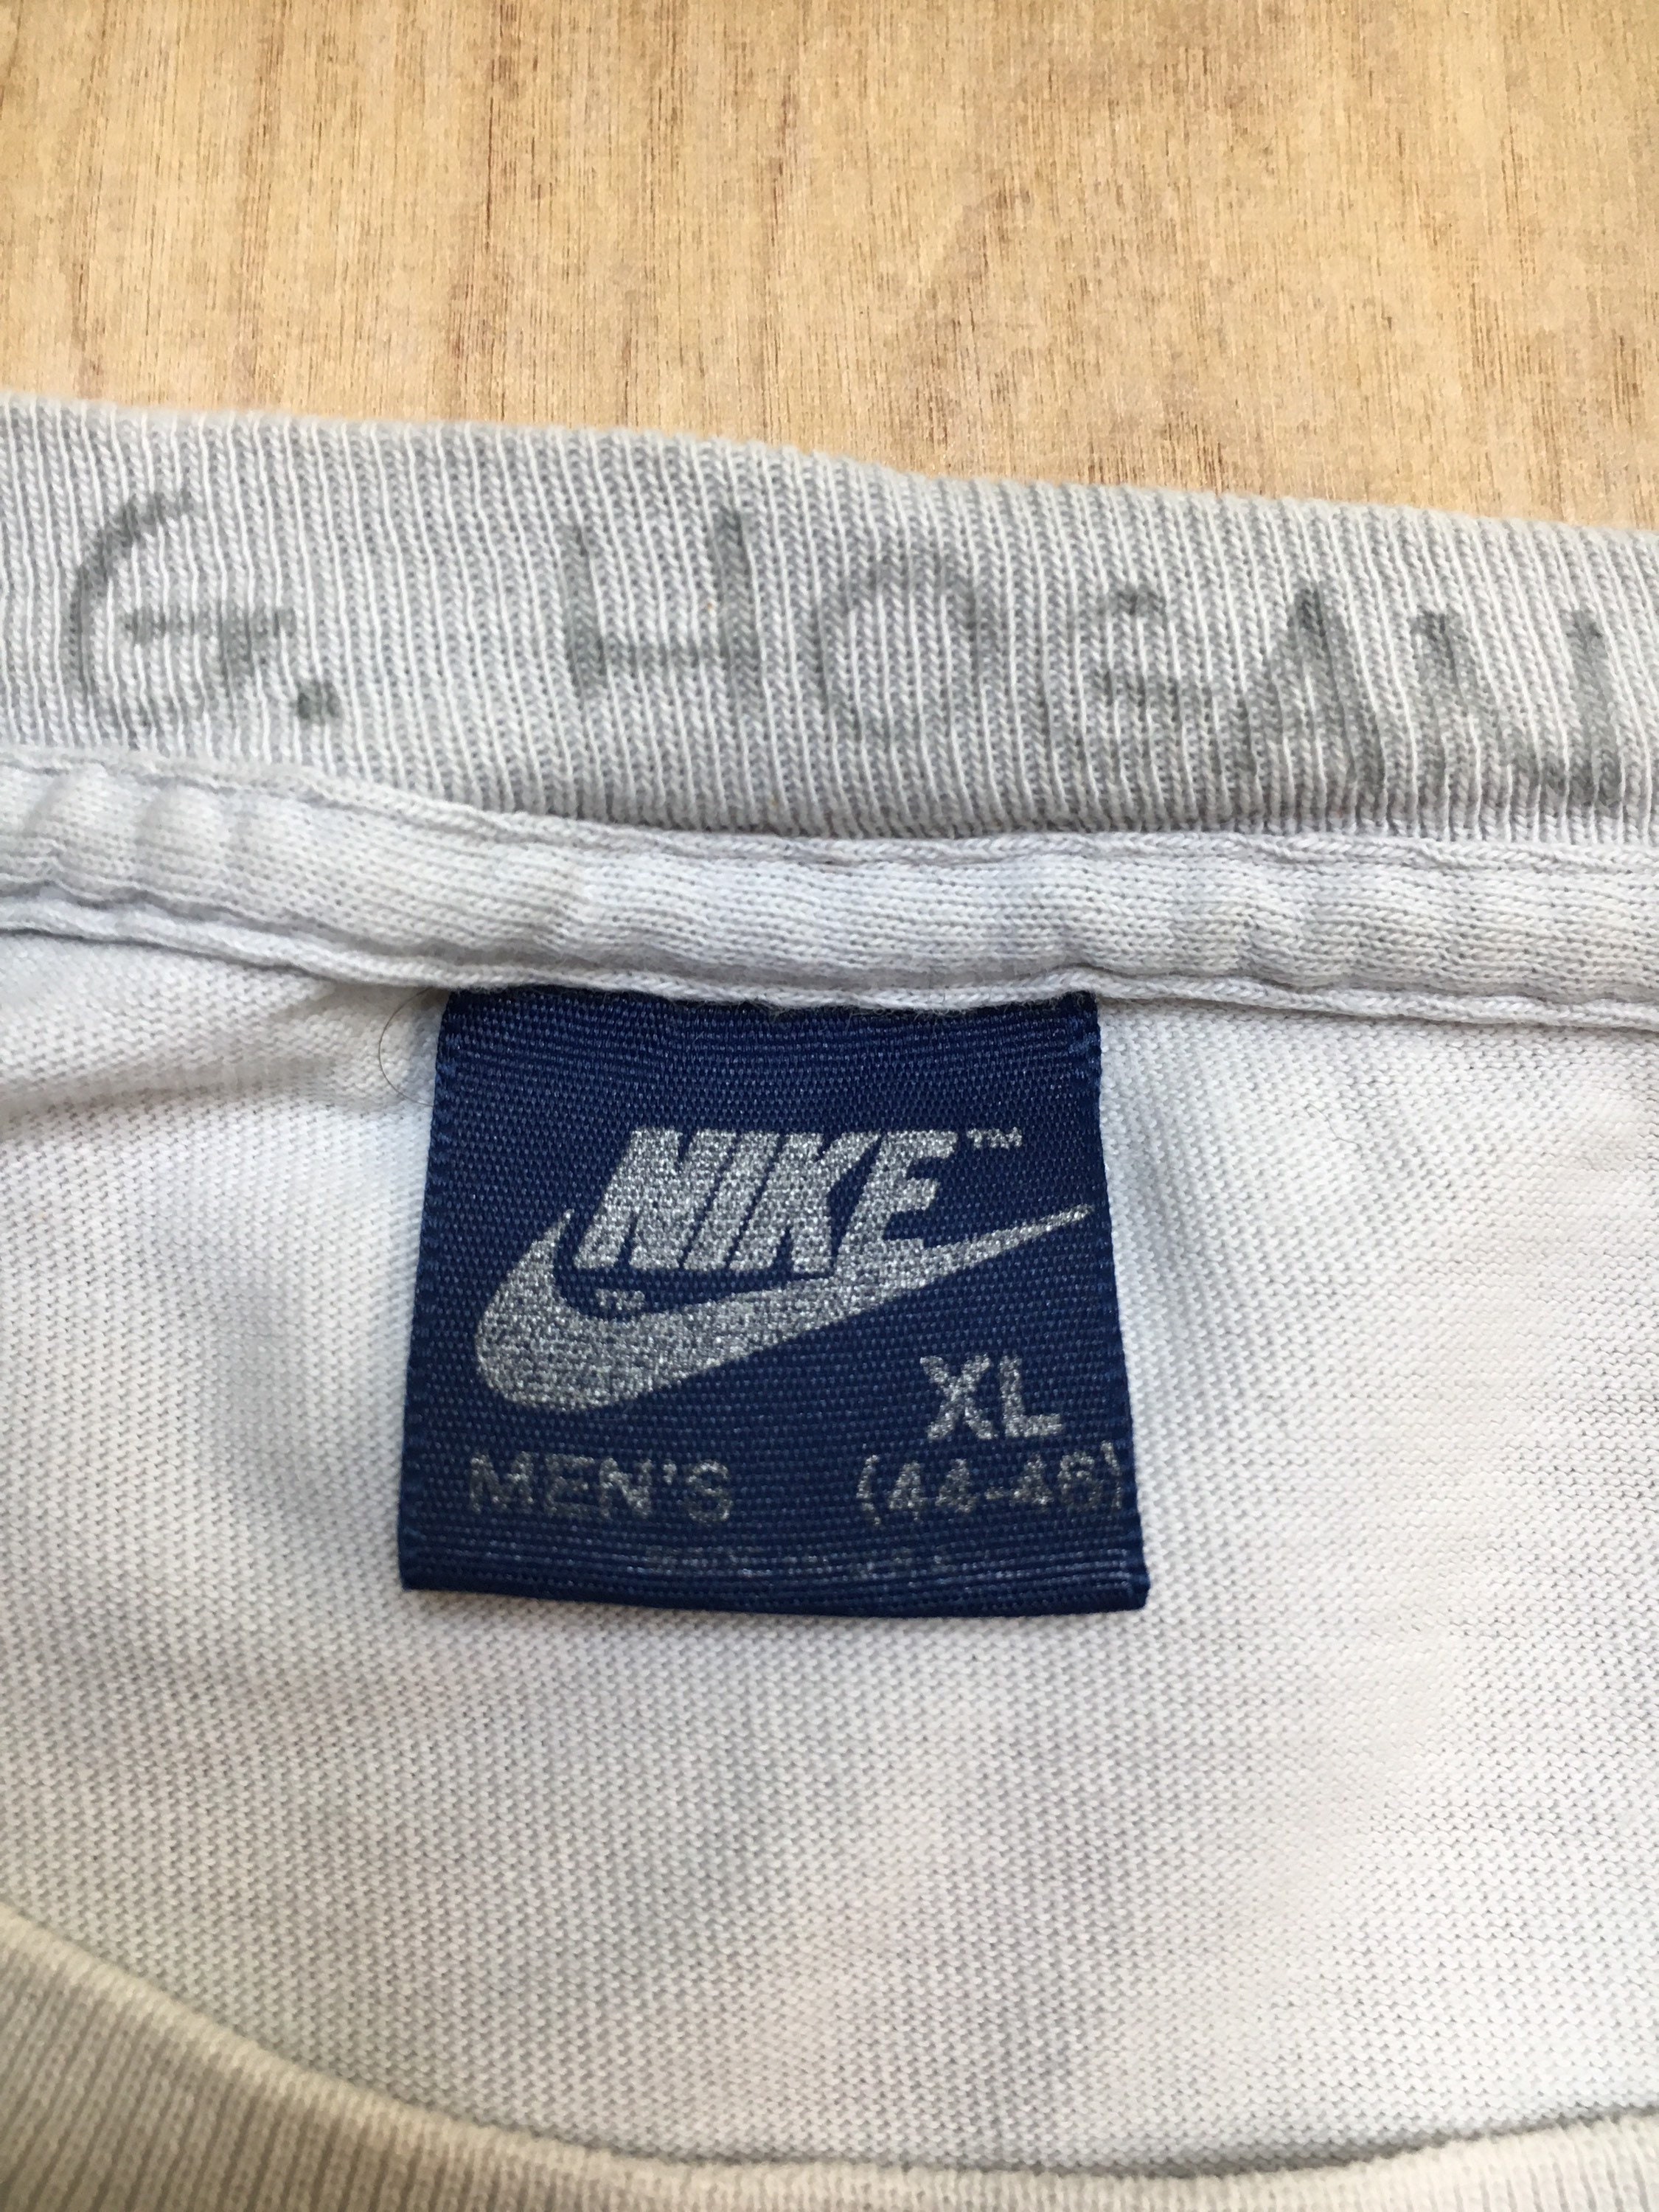 Nike Shirt Vintage 80s Blue Tag U.s. Lifeline Race Run Long | Etsy